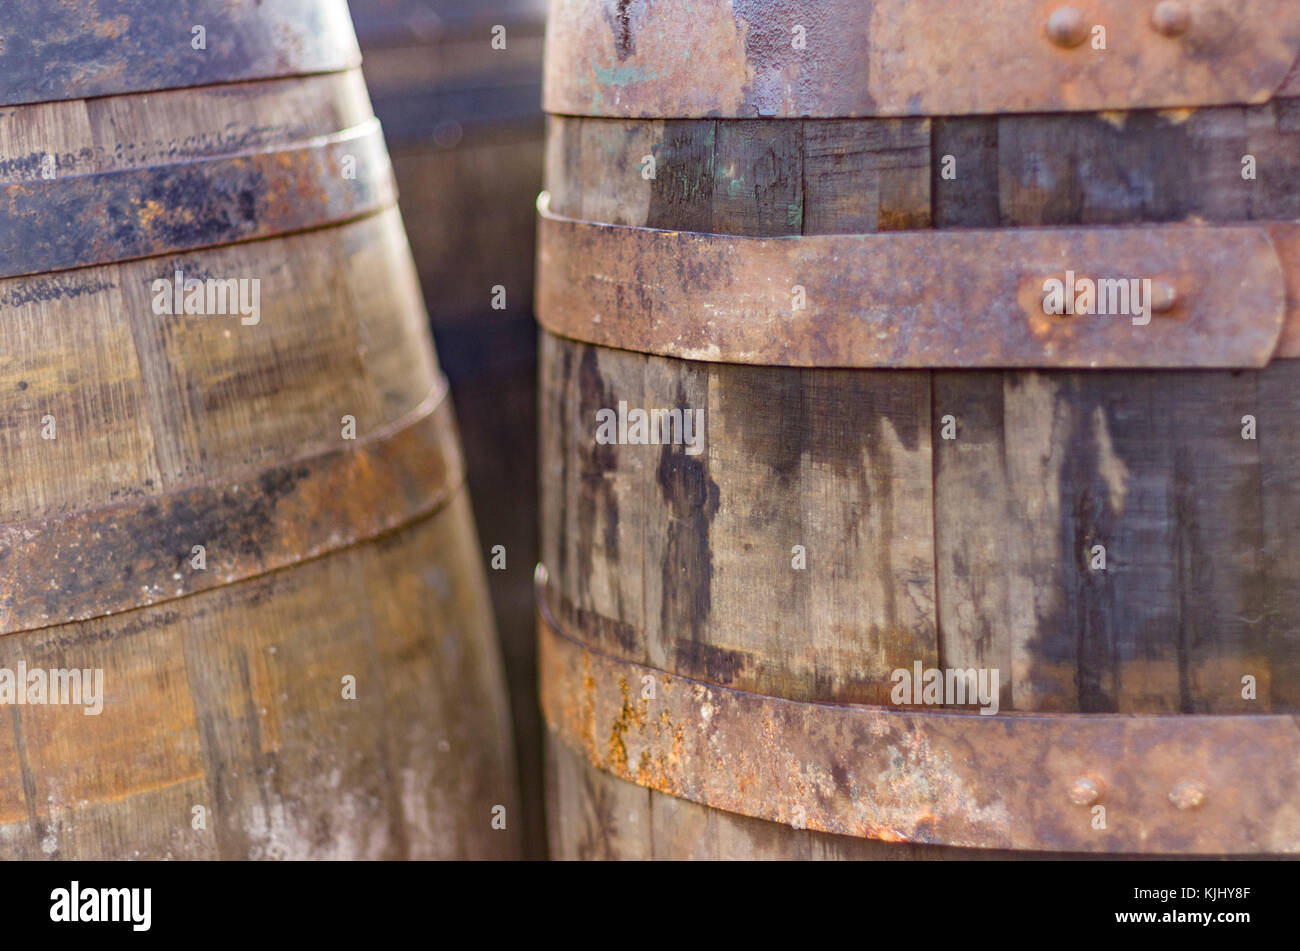 Whisky Barrels at Glenfiddich Distillery, Dufftown, Speyside, Scotland, UK Stock Photo